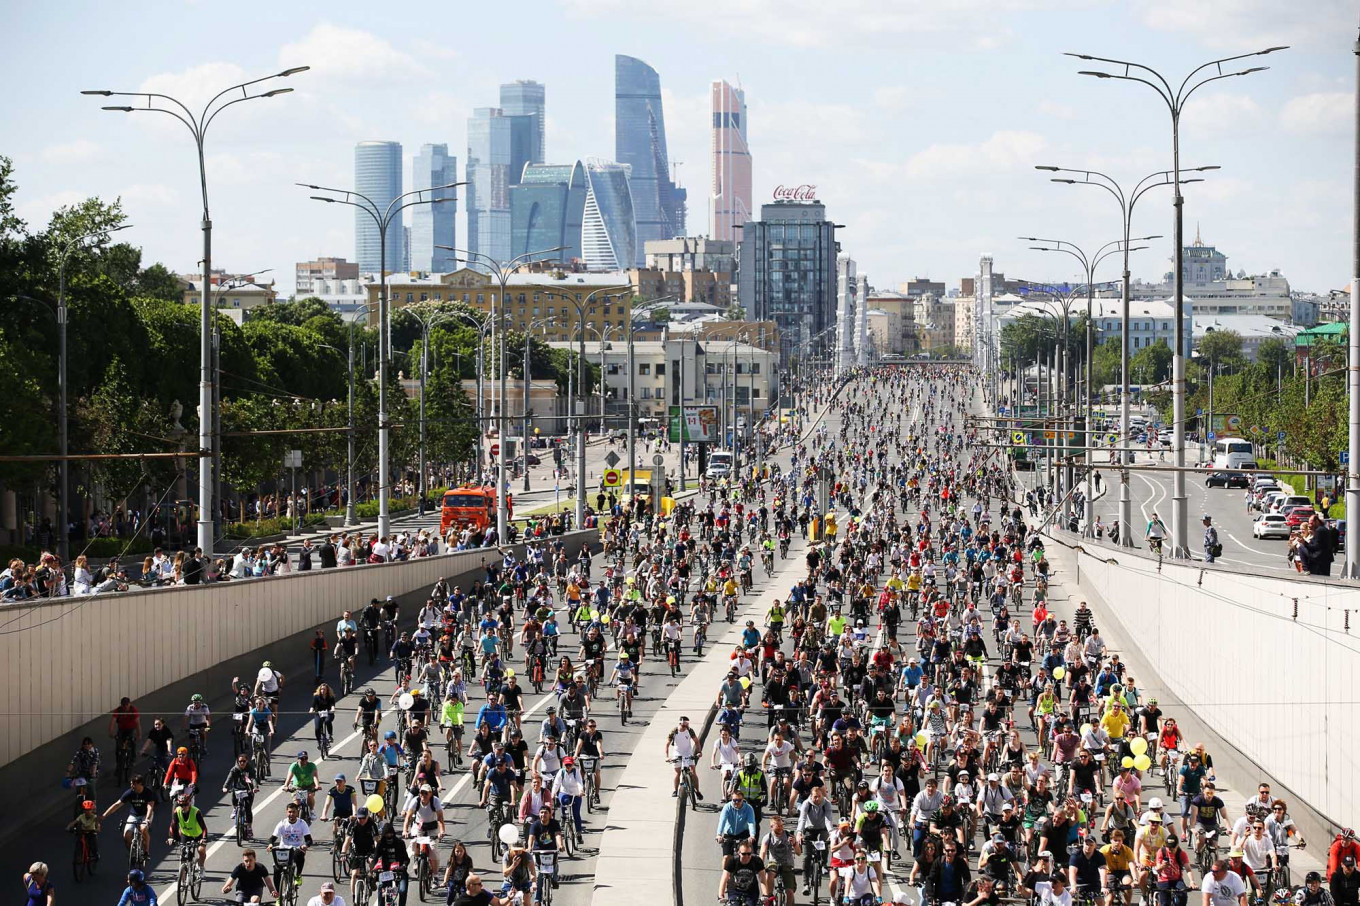 Spring Bike Festival Races Through Moscow